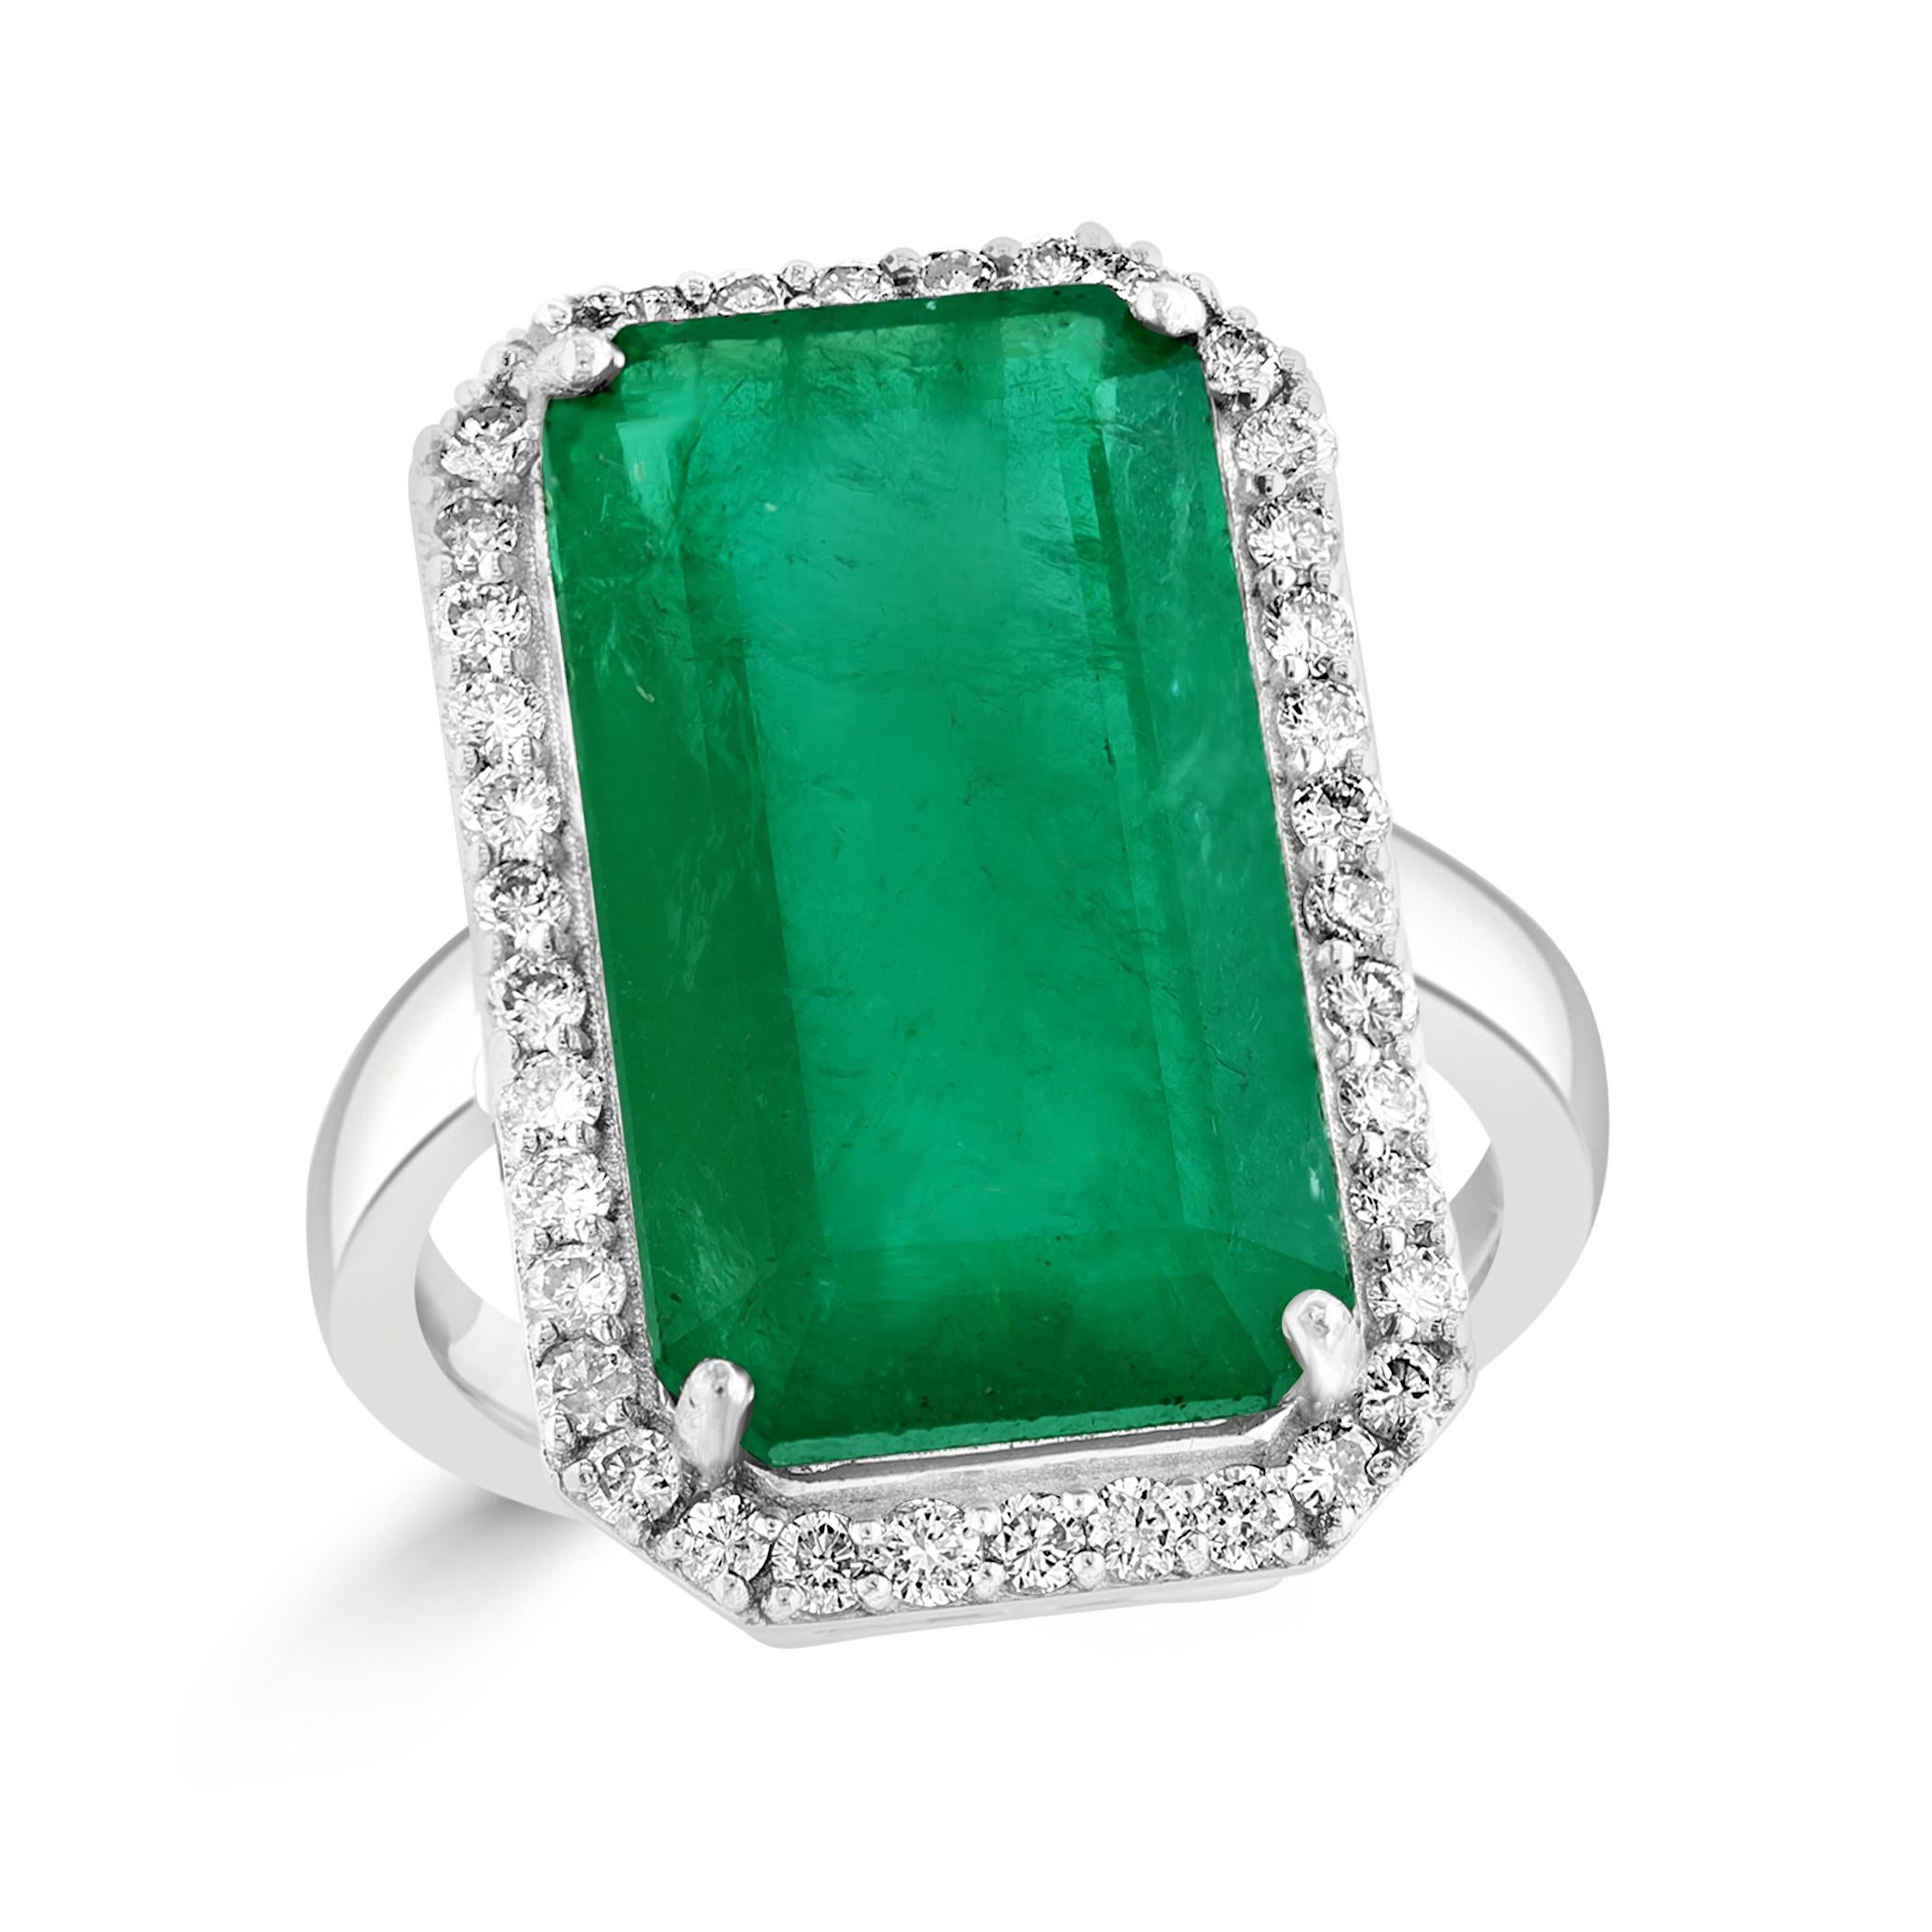 Natural 9 Carat Emerald Cut Zambian Emerald & Diamond Ring in 14 Kt White Gold 10